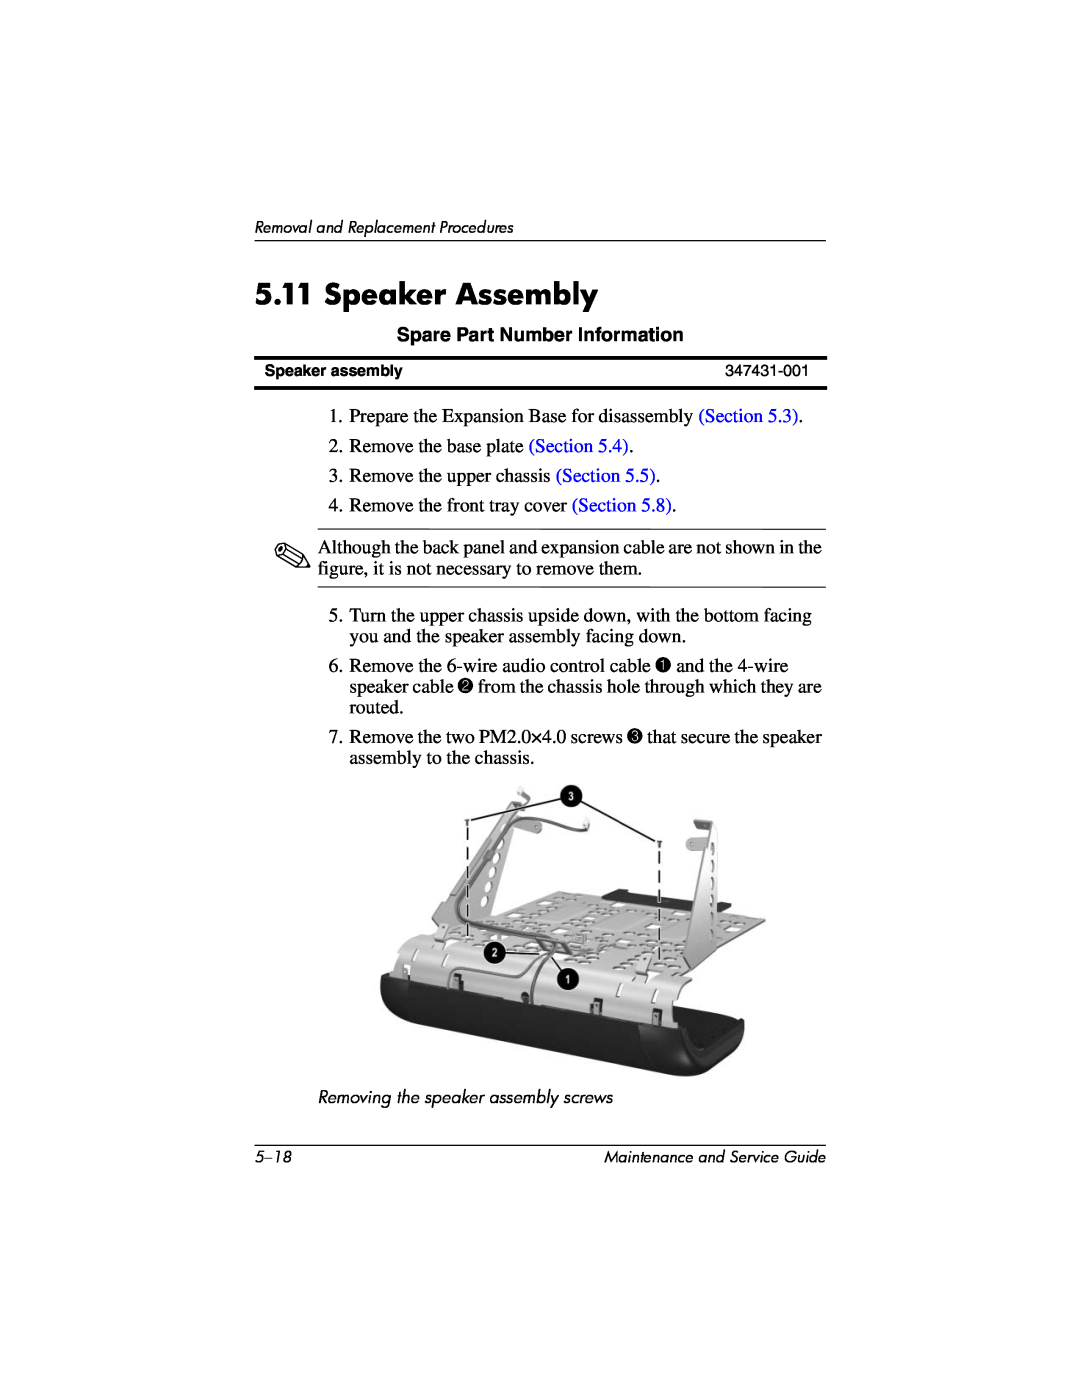 HP R3050EA, R3065US, R3070US, R3060US Speaker Assembly, Spare Part Number Information, Removing the speaker assembly screws 